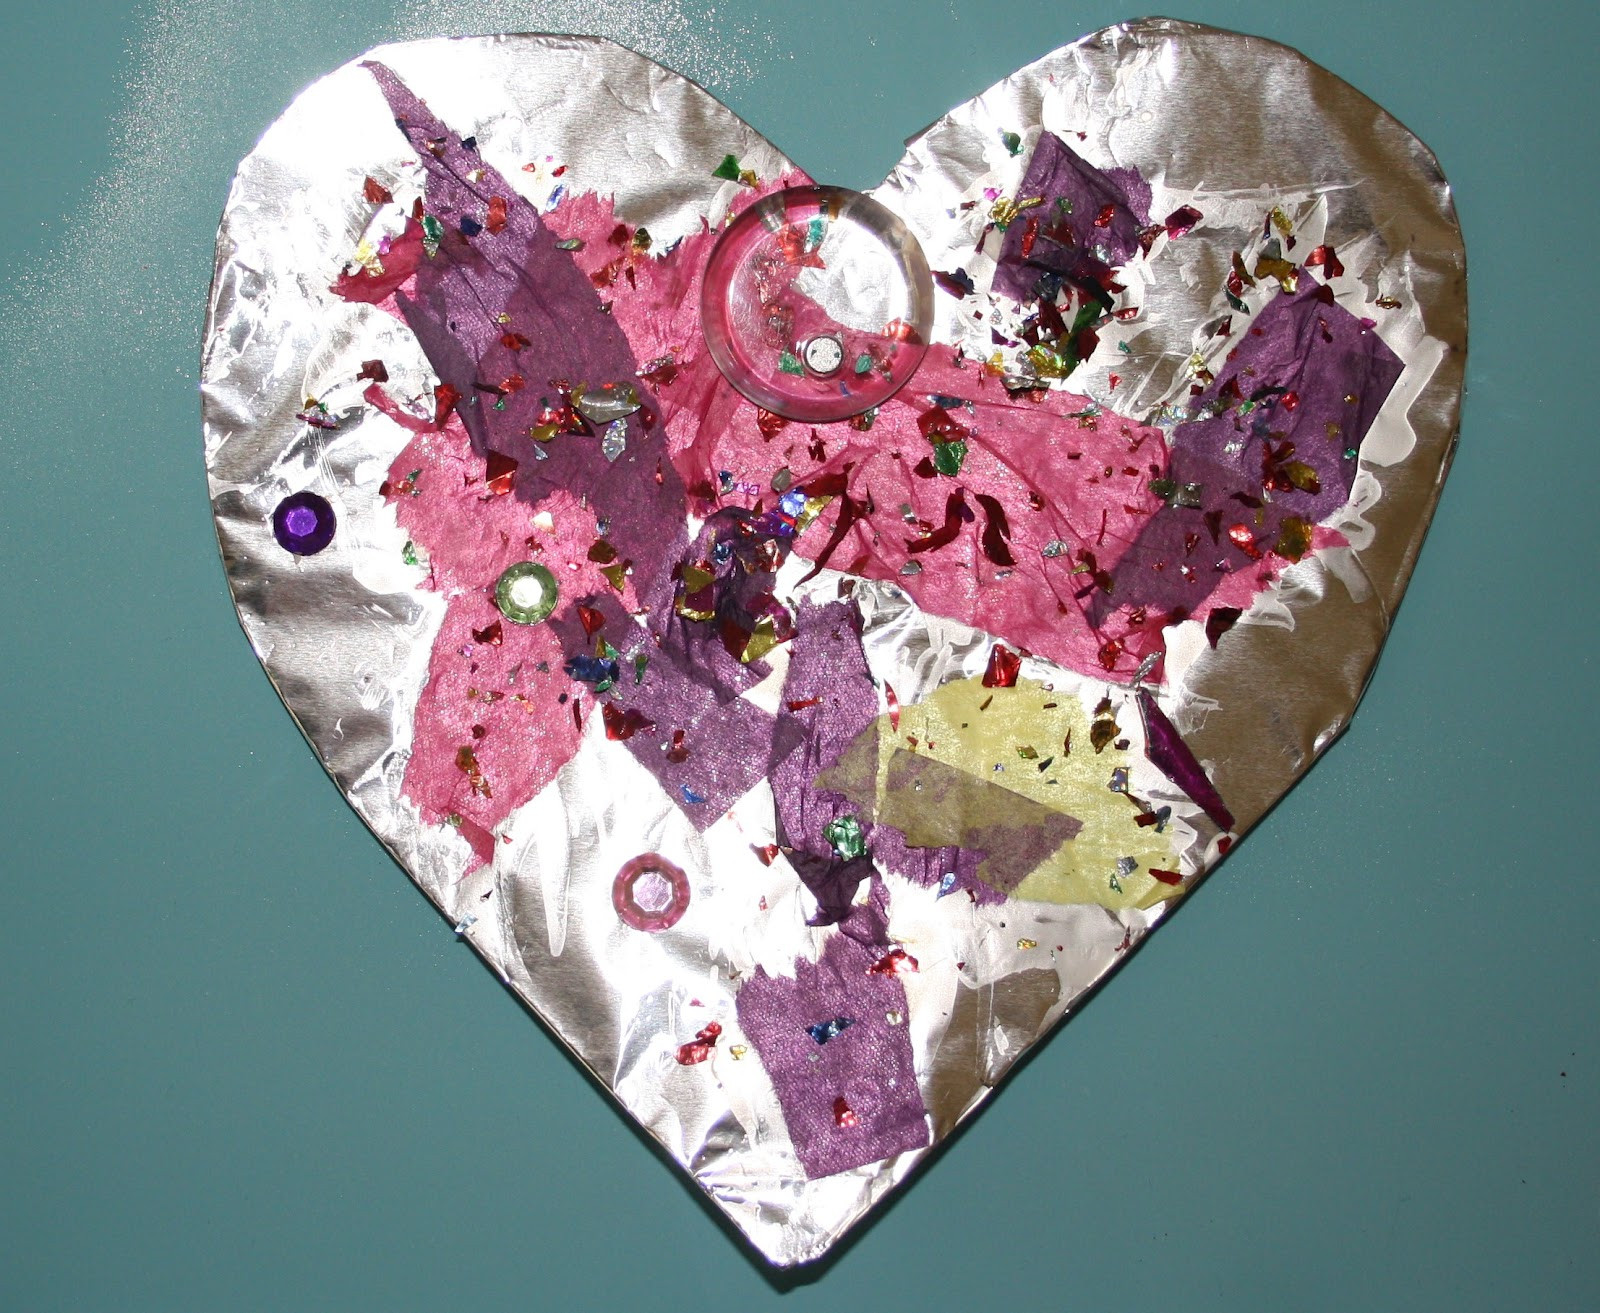 Heart Craft Ideas For Preschoolers
 Preschool Crafts for Kids Valentine s Day Foil Hearts